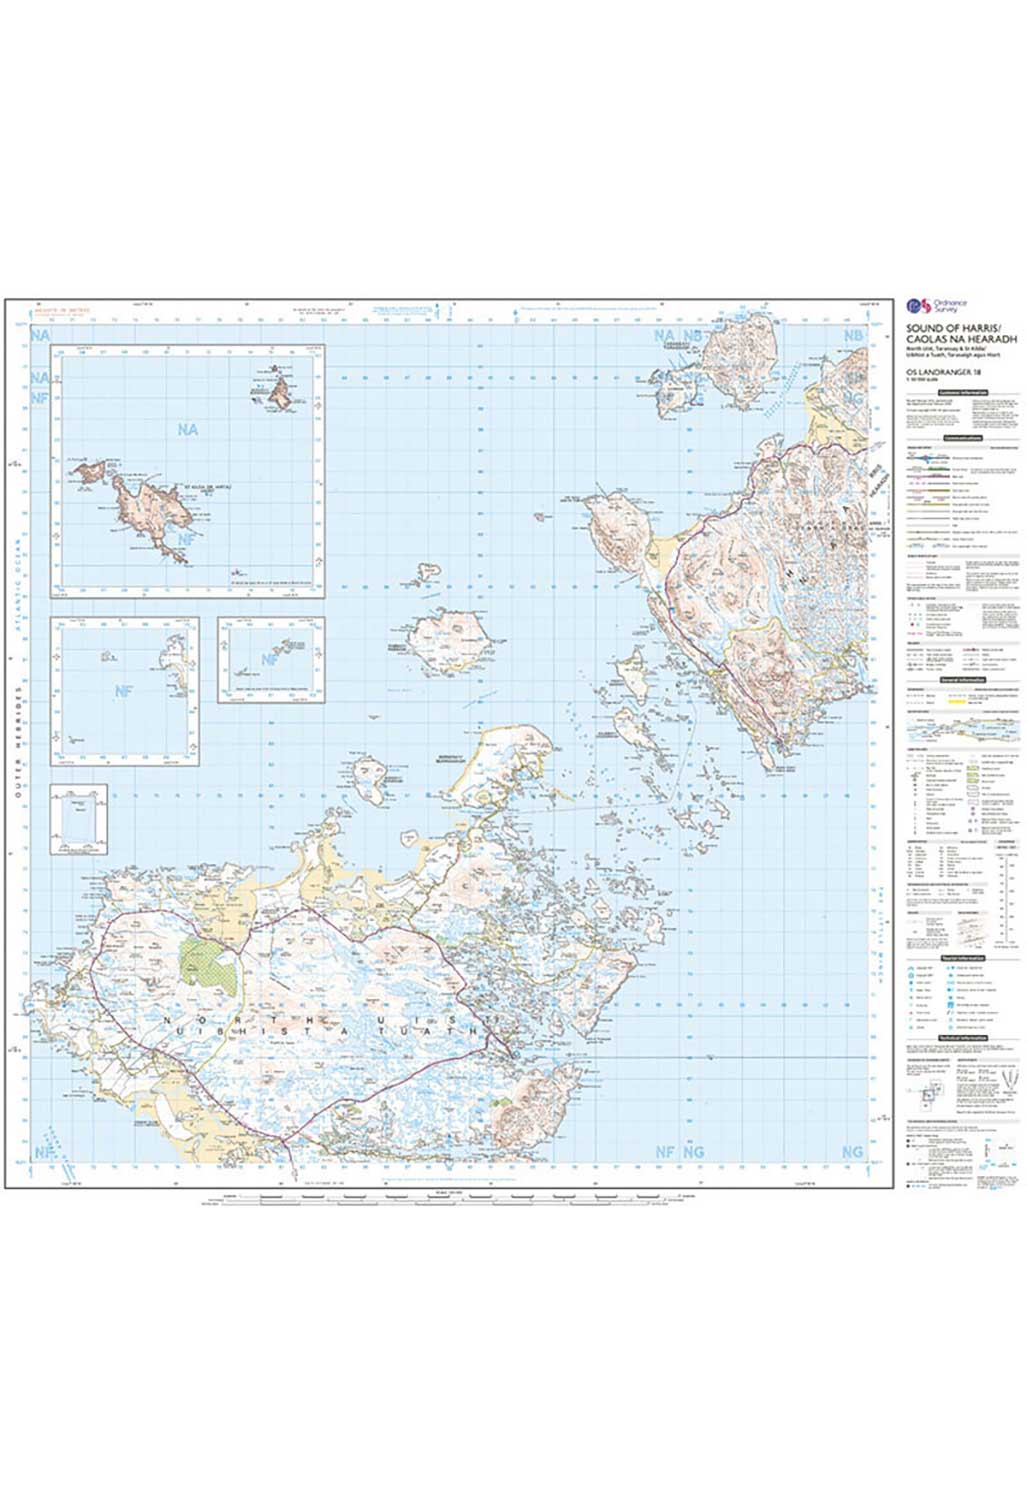 Ordnance Survey Sound of Harris, North Uist, Taransay & St Kilda - Landranger 18 Map